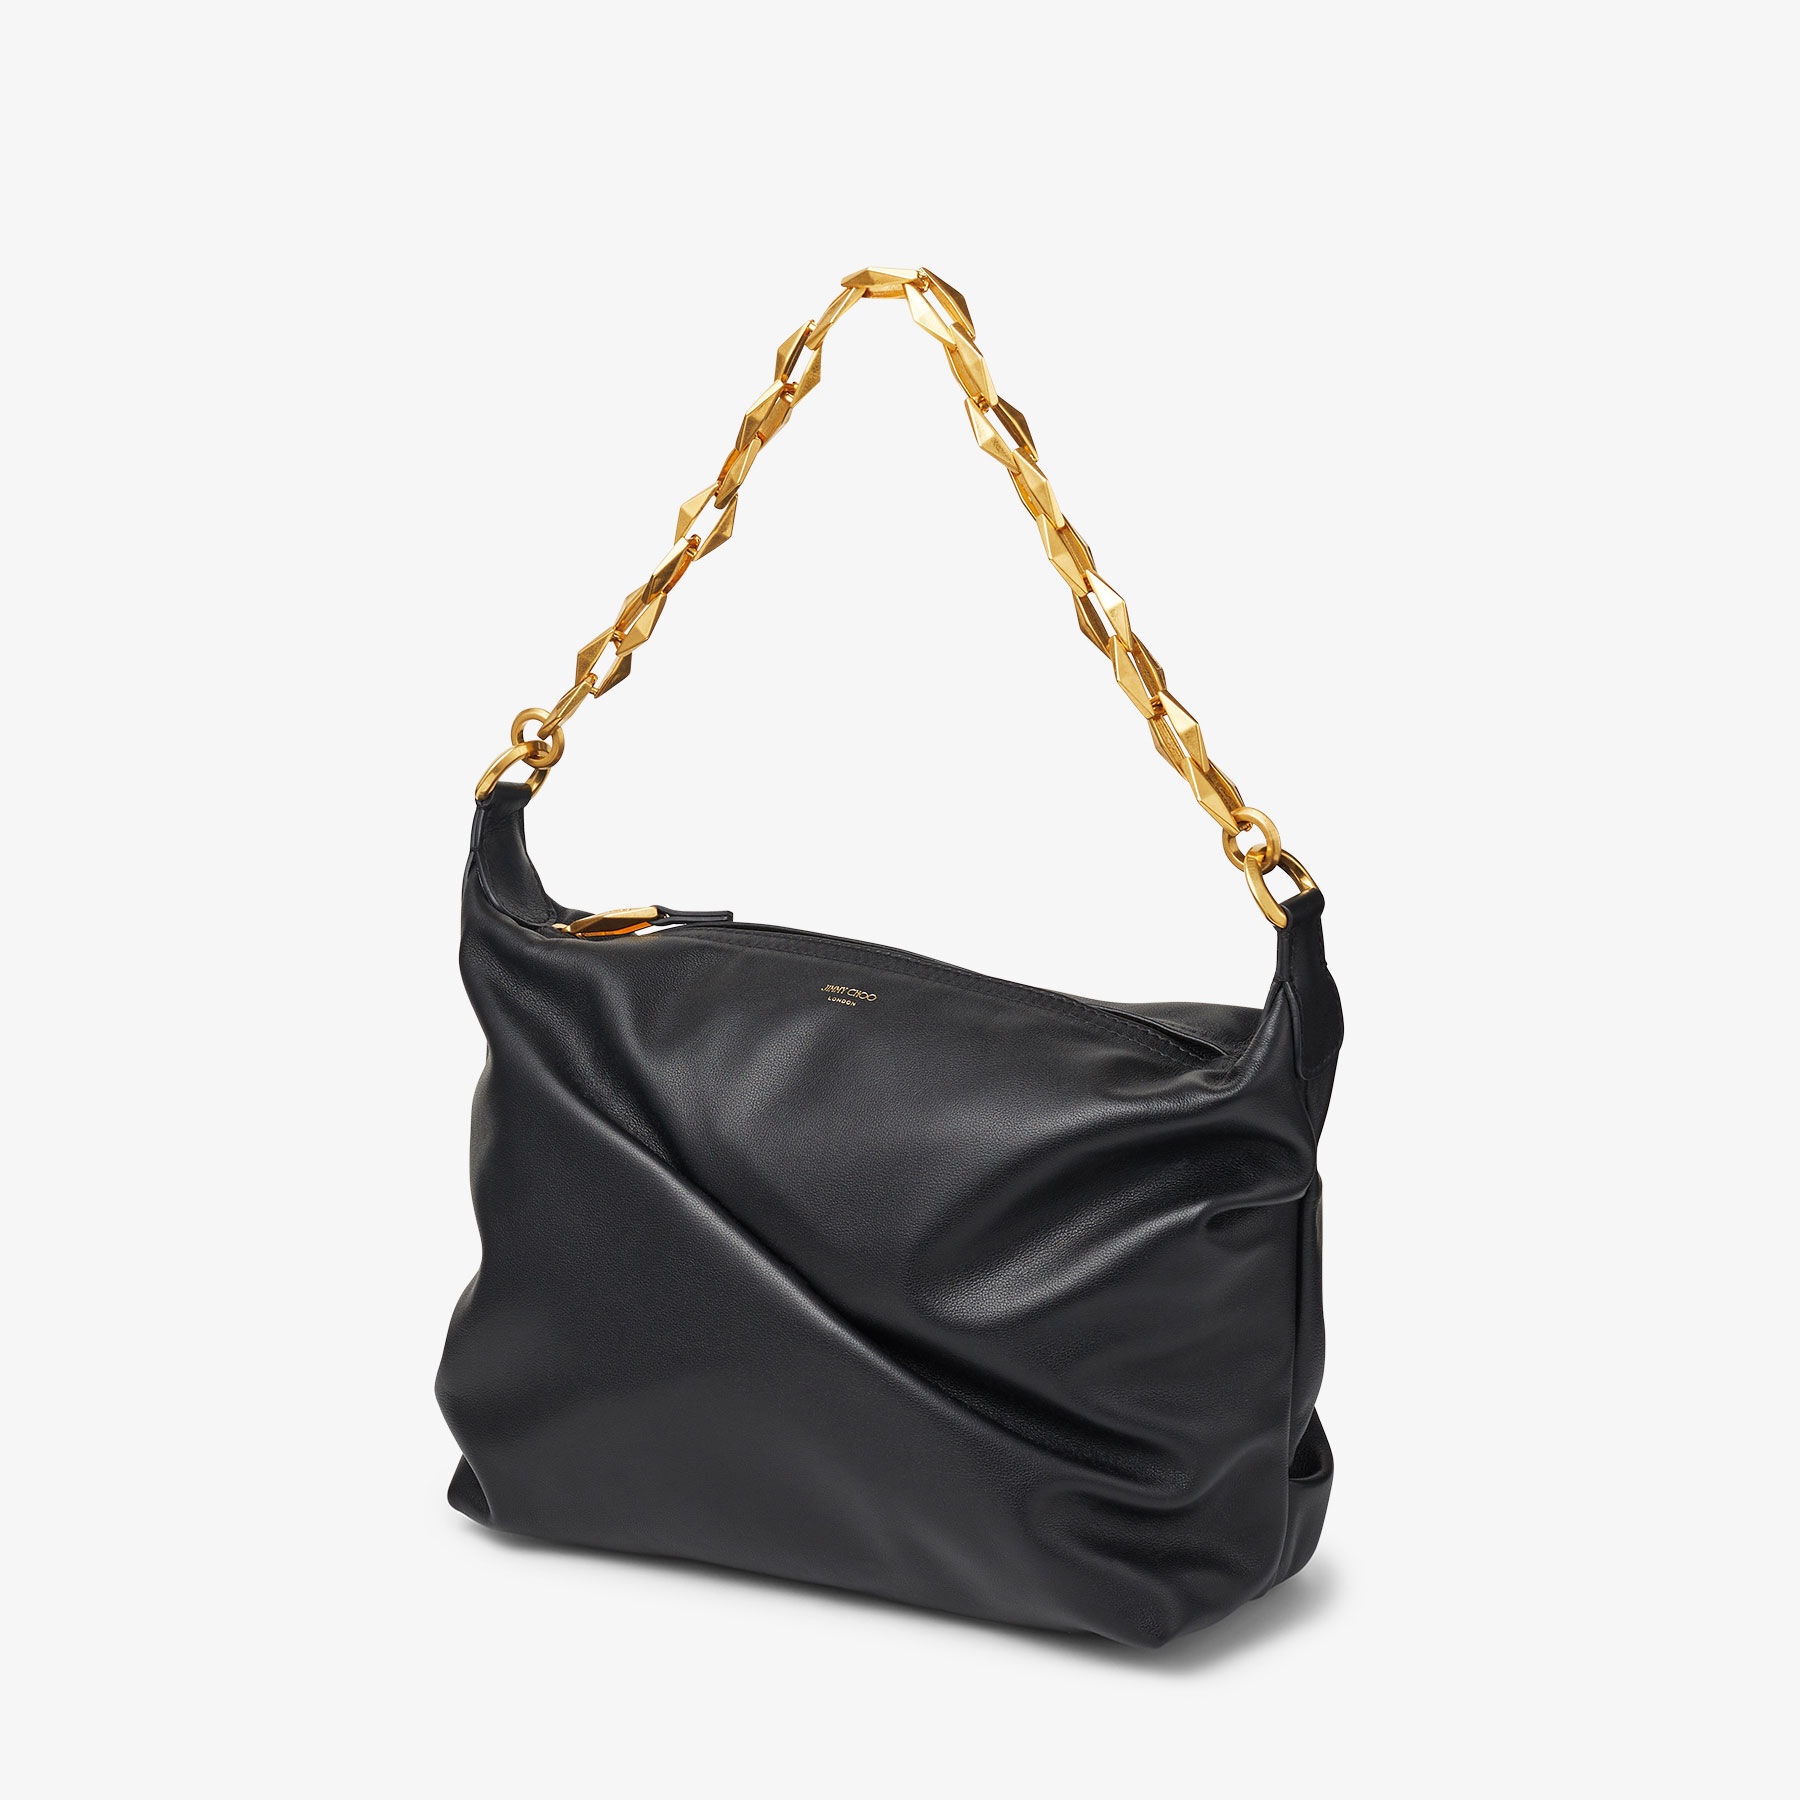 Diamond Soft Hobo S
Black Soft Calf Leather Hobo Bag with Chain Strap - 6